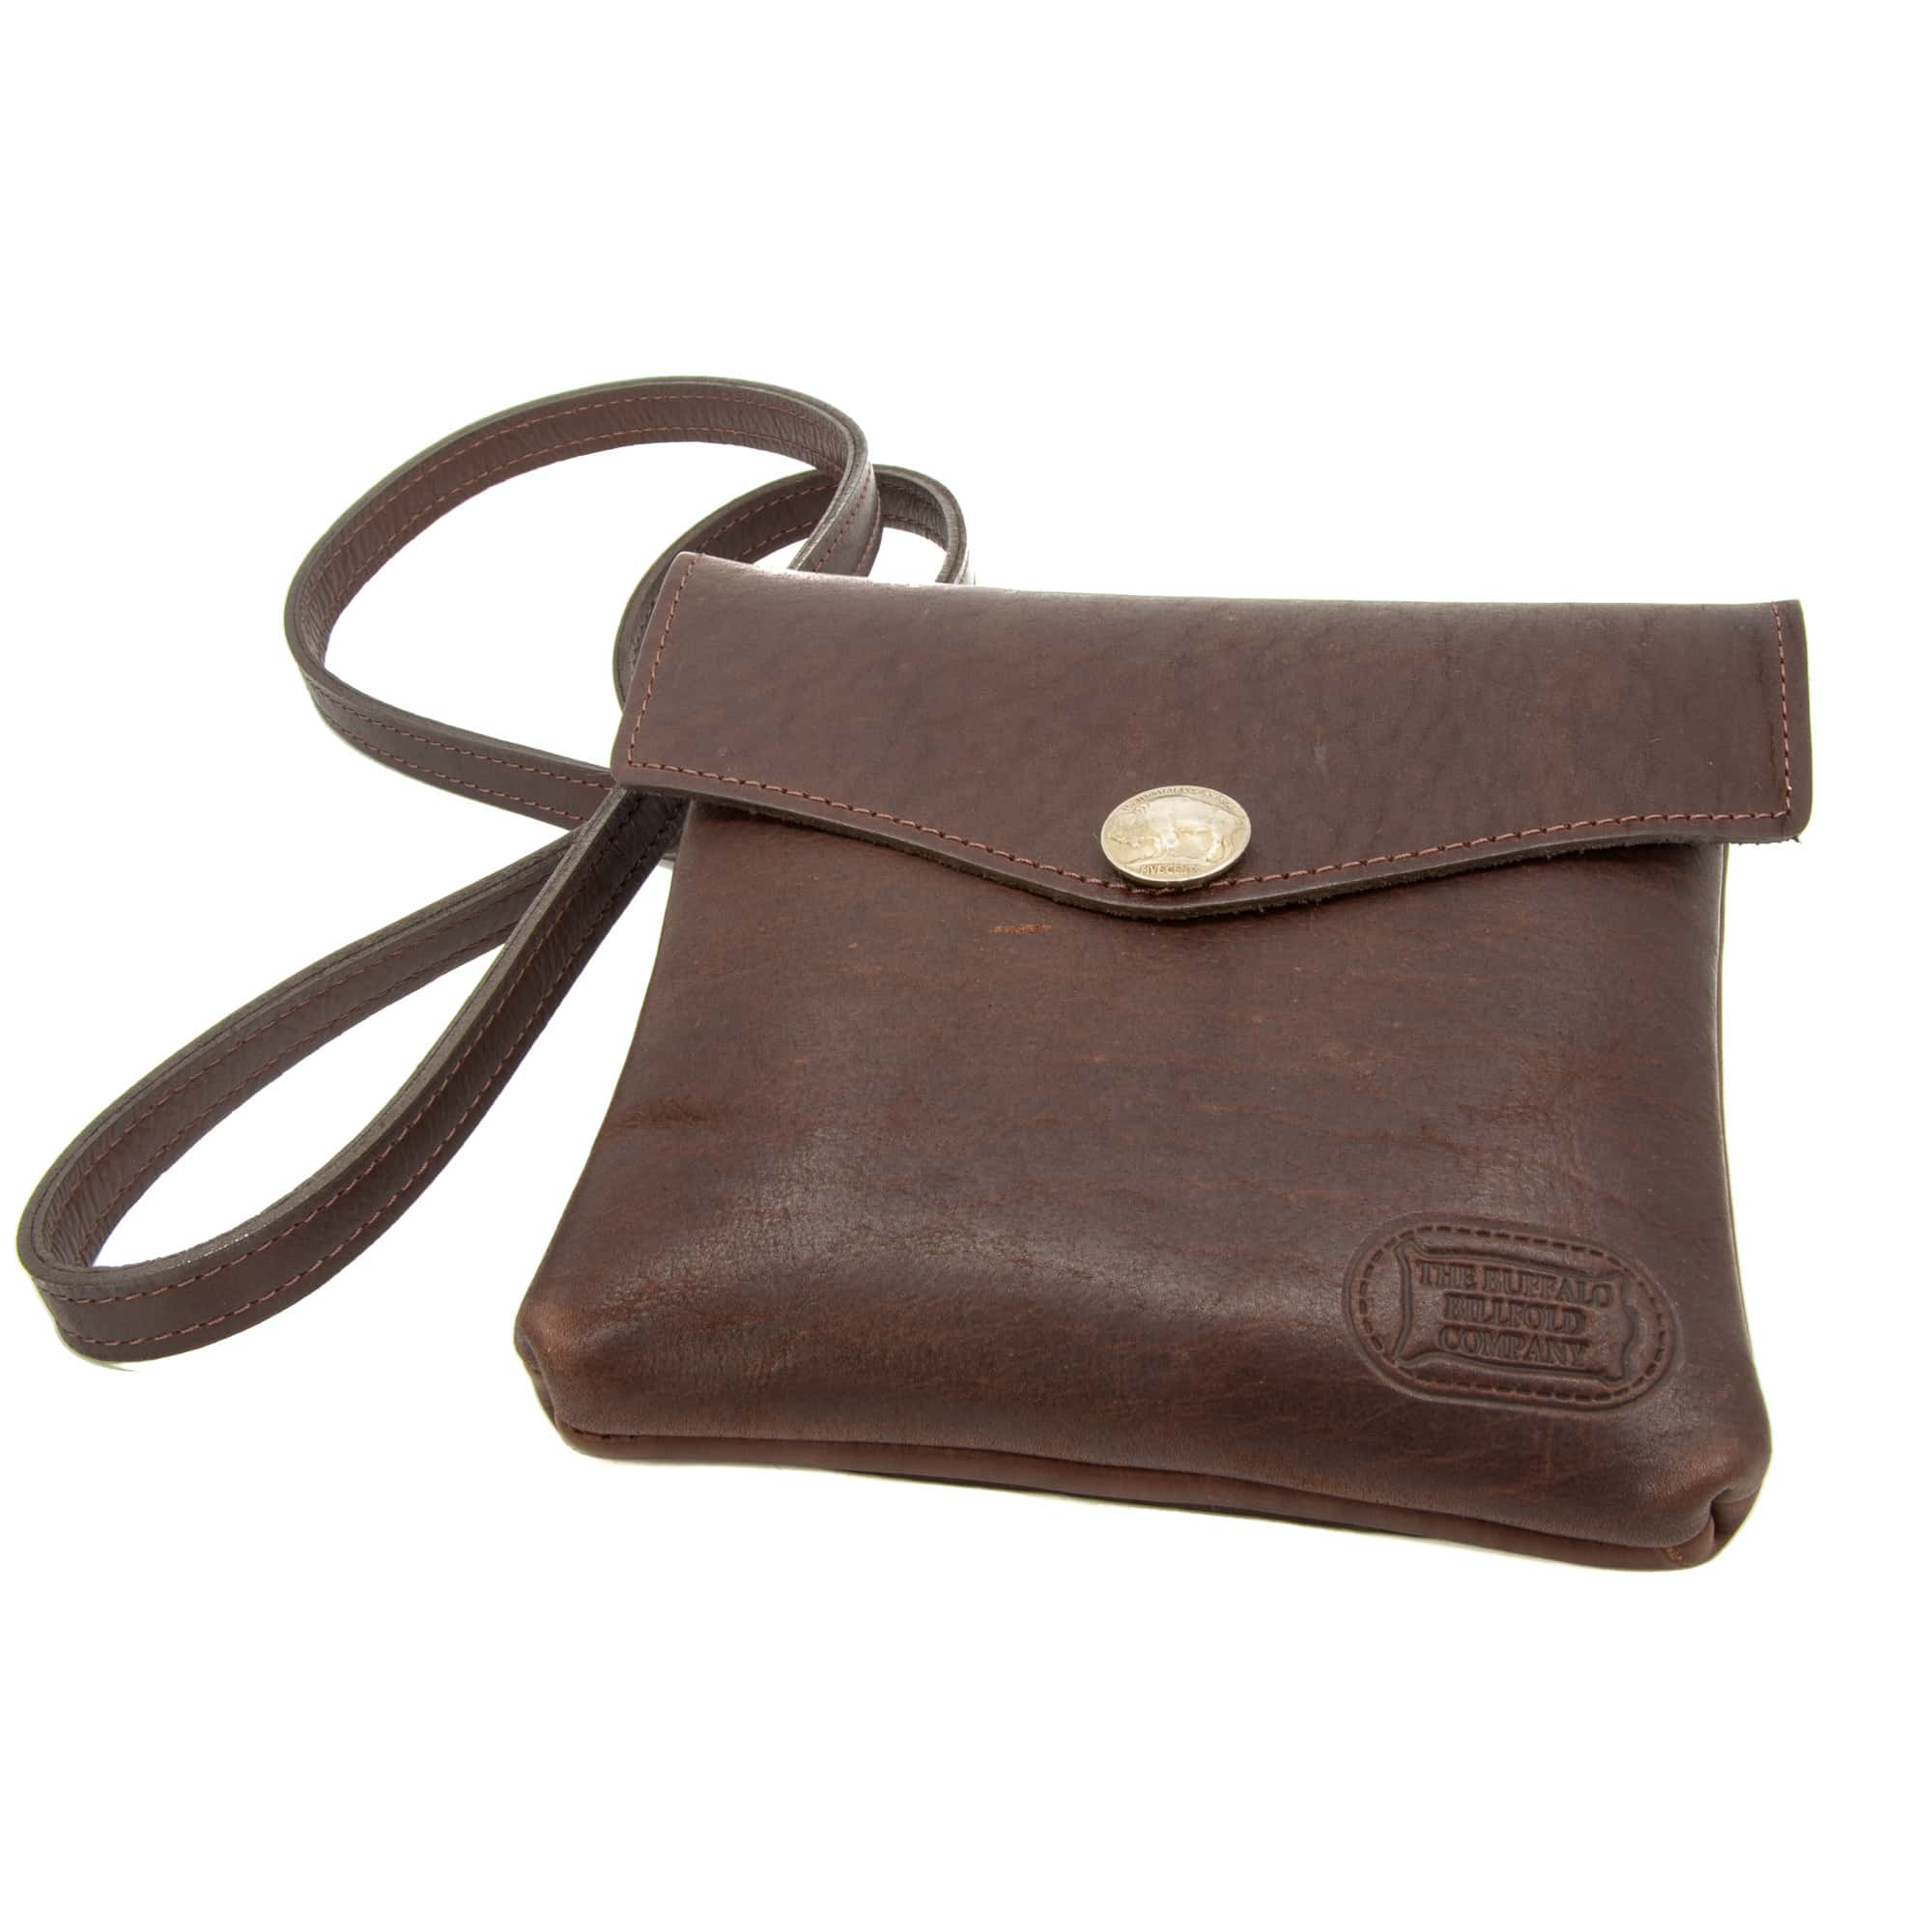 Hobo International Leather purse pockets, zippers, striped interior Vintage  | eBay